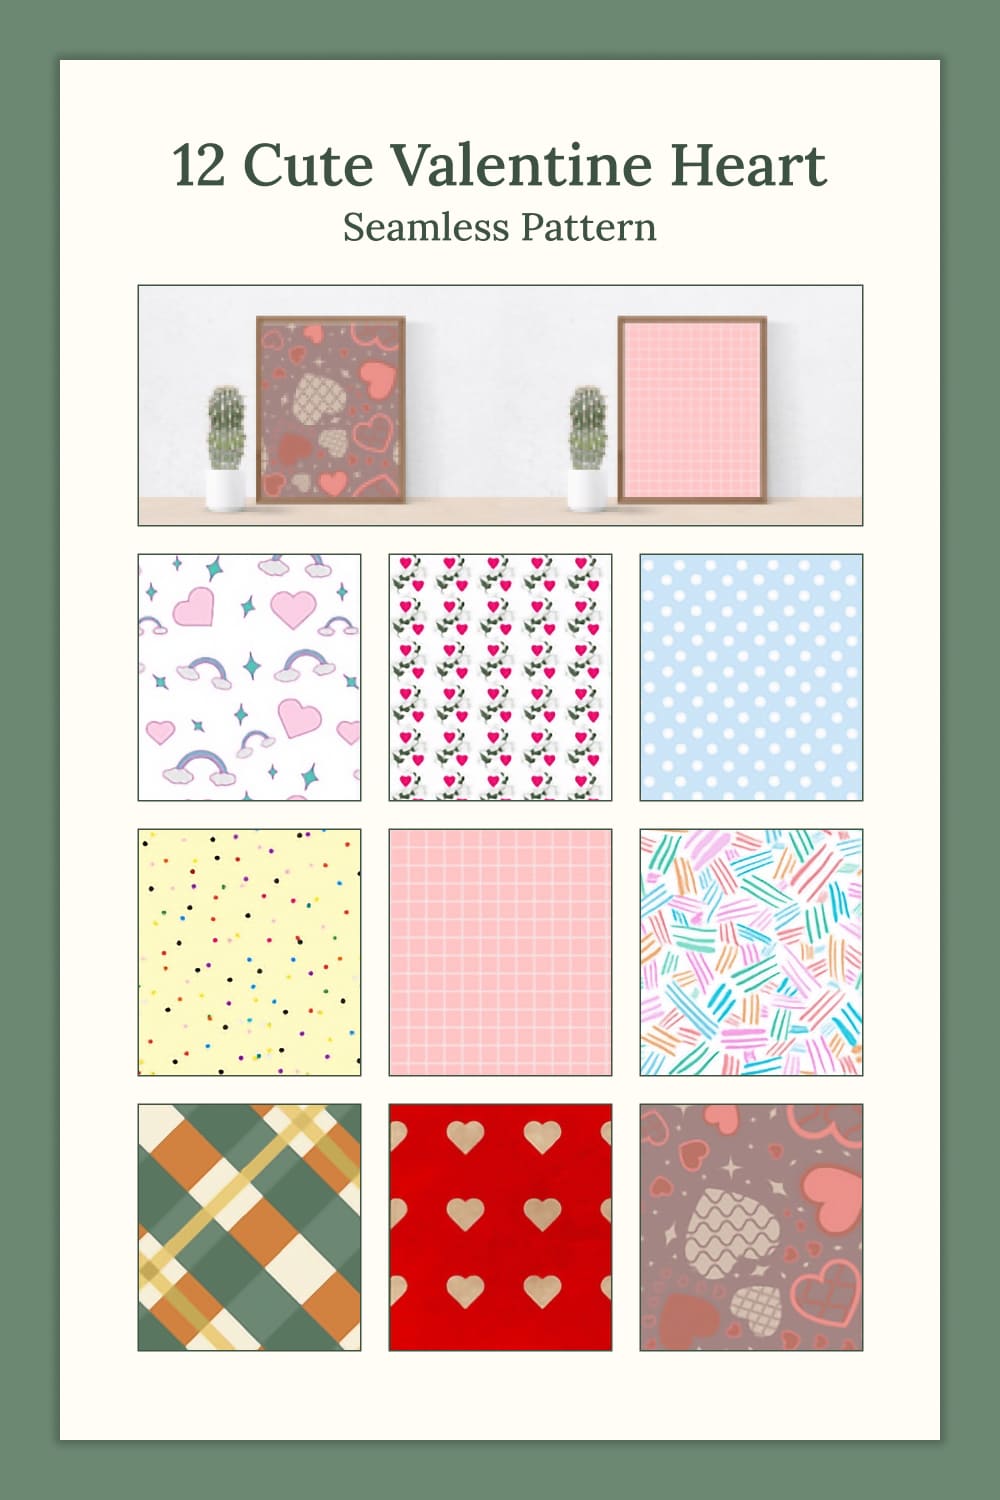 12 Cute Valentine Heart Seamless Pattern - Pinterest.